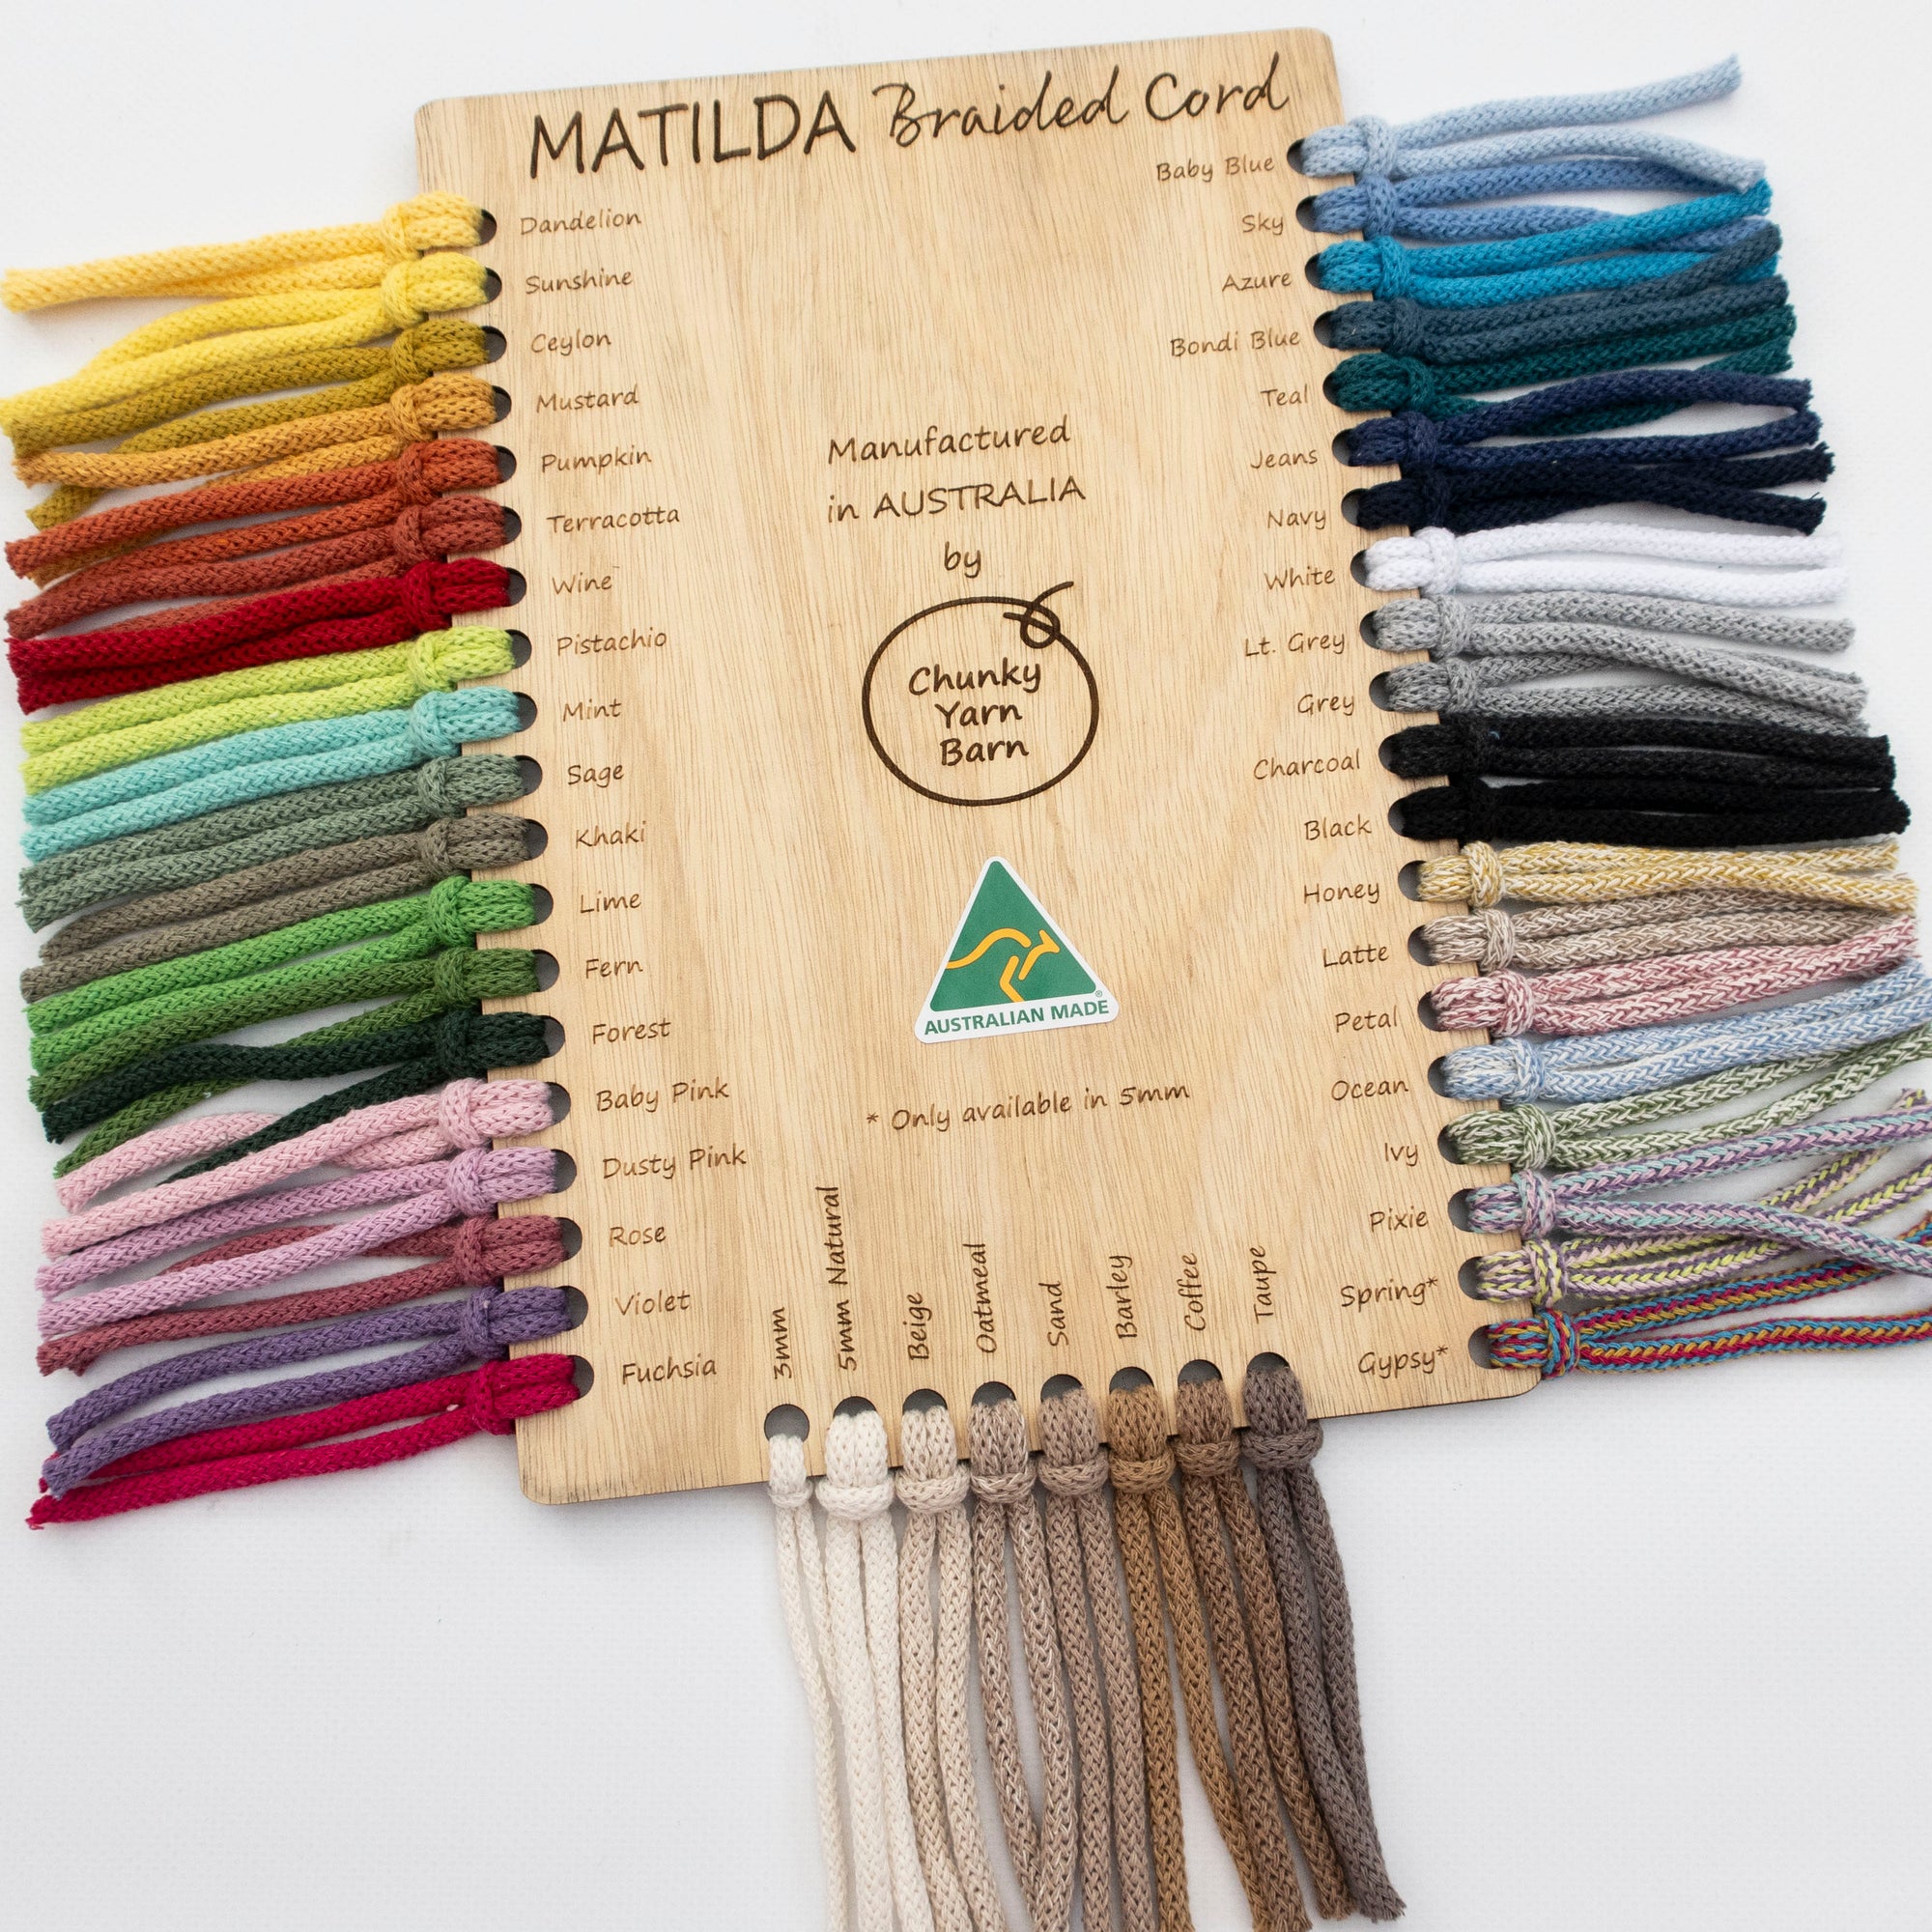 MATILDA Braided Cord 5mm 50m